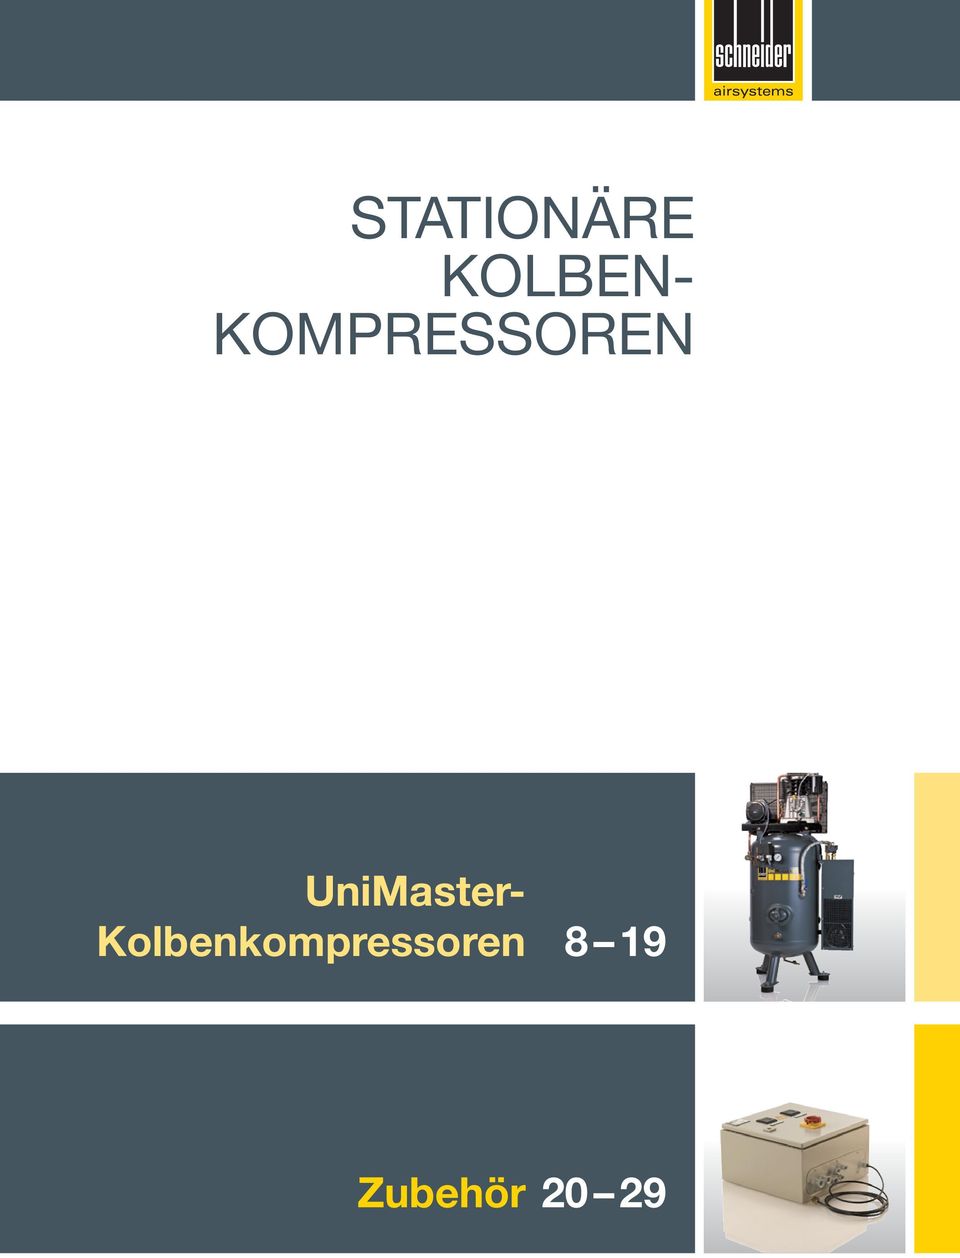 UniMaster-